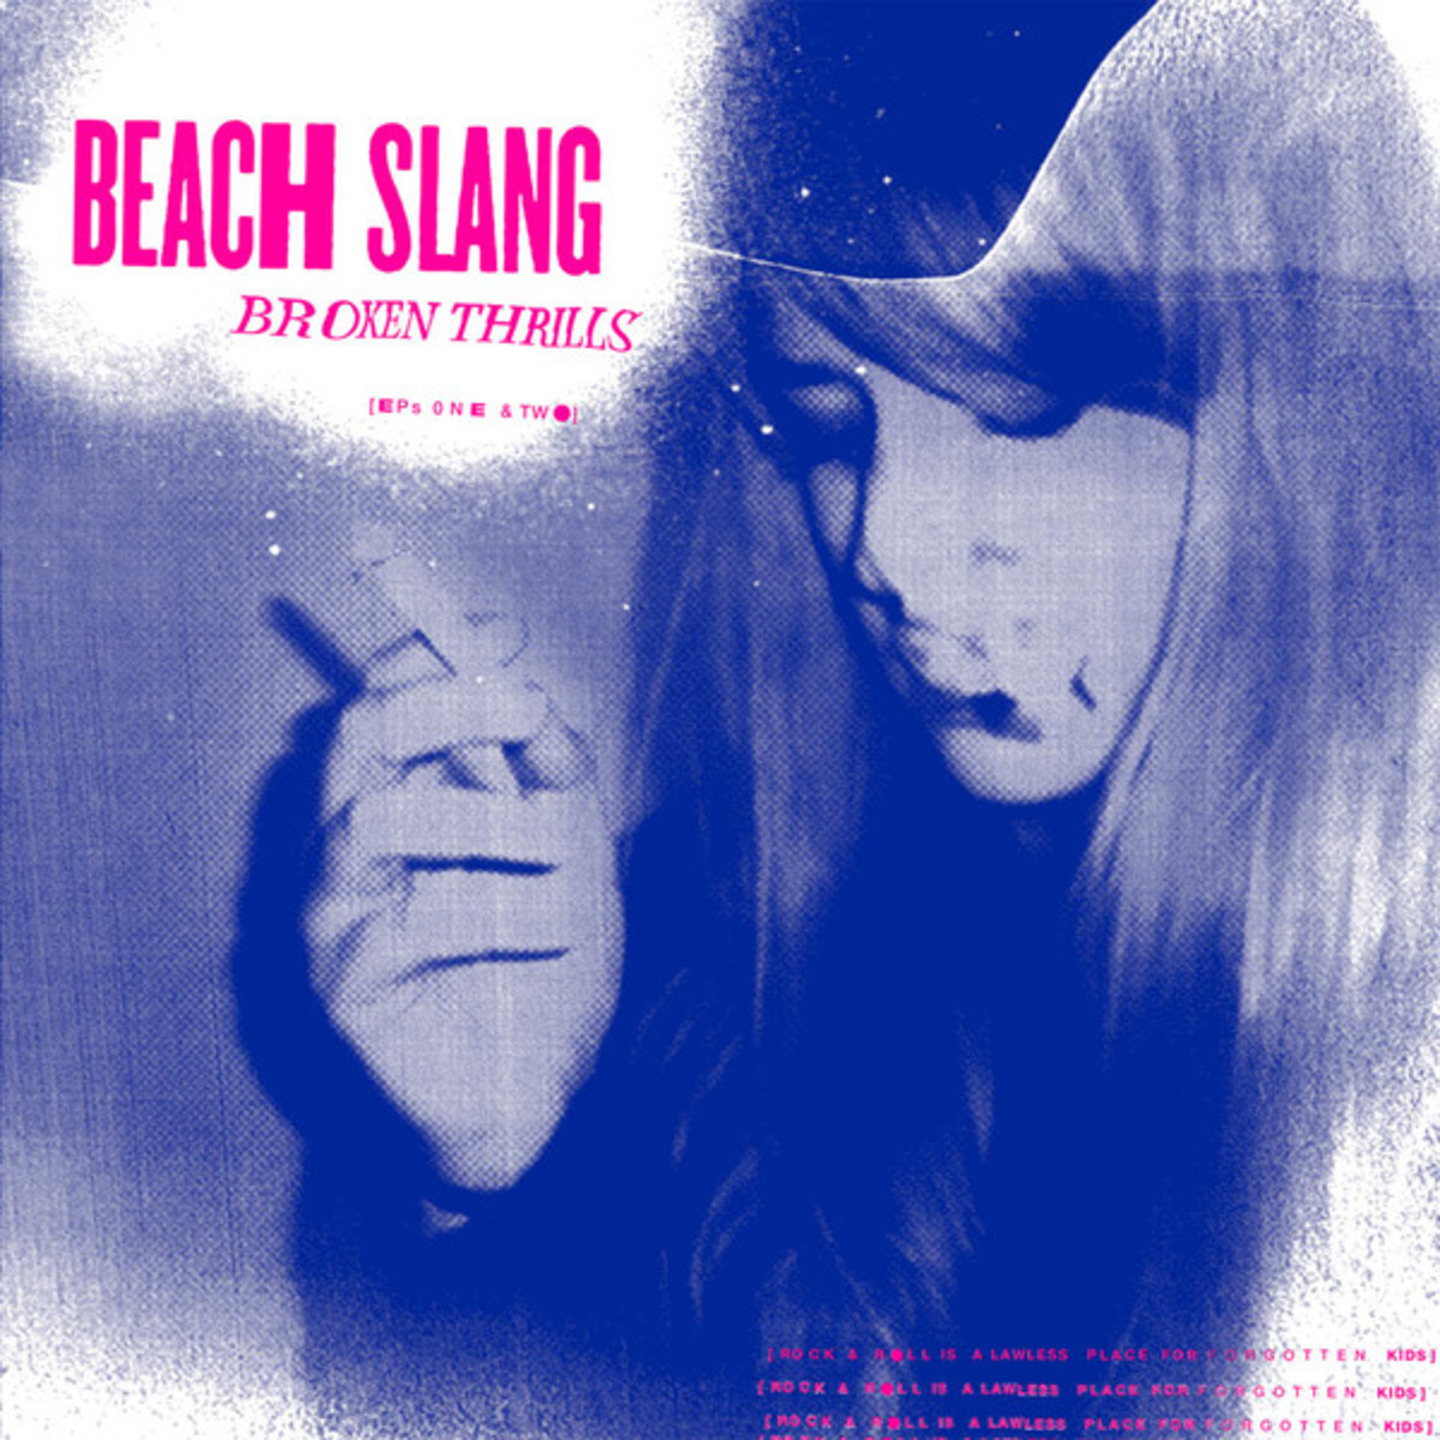 BEACH SLANG - Broken Thrills LP